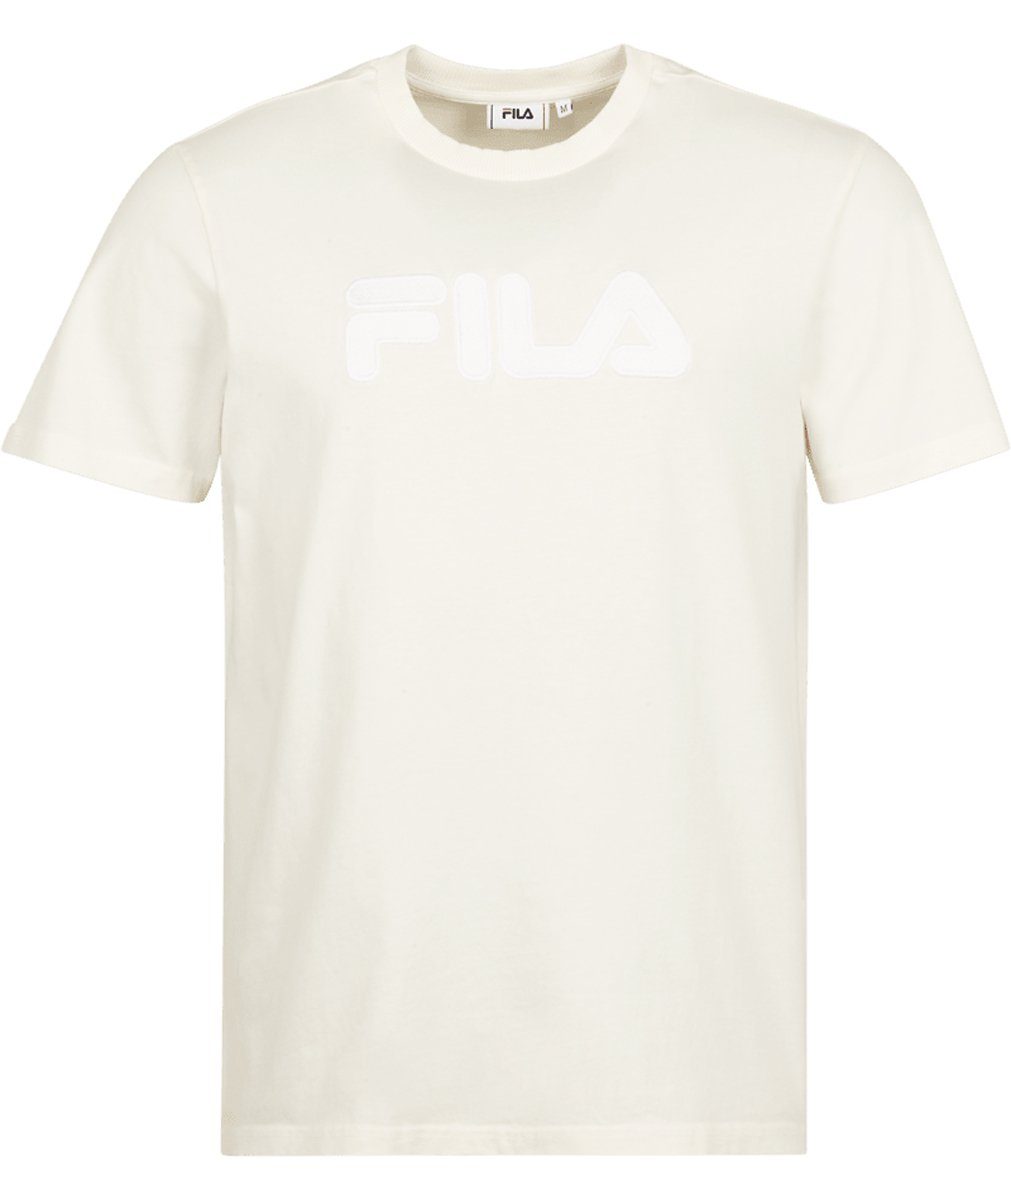 Fila T-Shirt Herren T-Shirt BUEK - Rundhals, Kurzarm